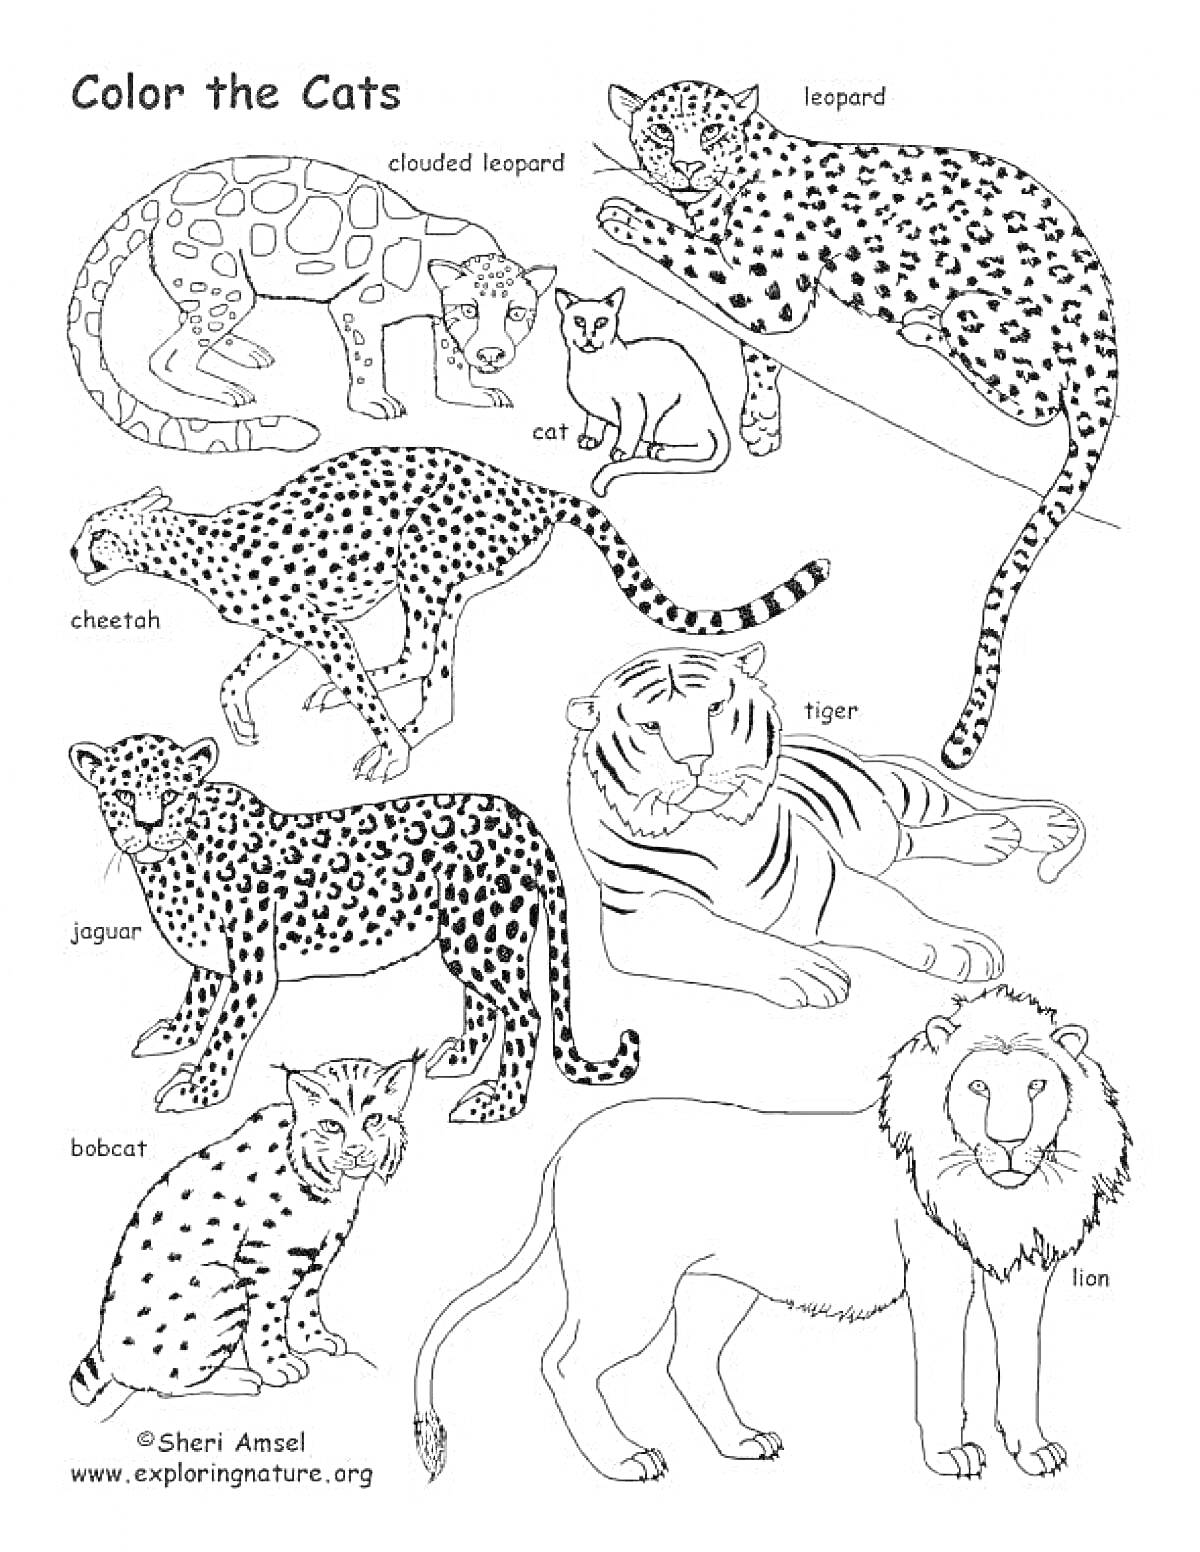 Раскраска Раскраска с дикими кошками: дымчатый леопард, кот, гепард, ягуар, рысь, леопард, тигр, лев